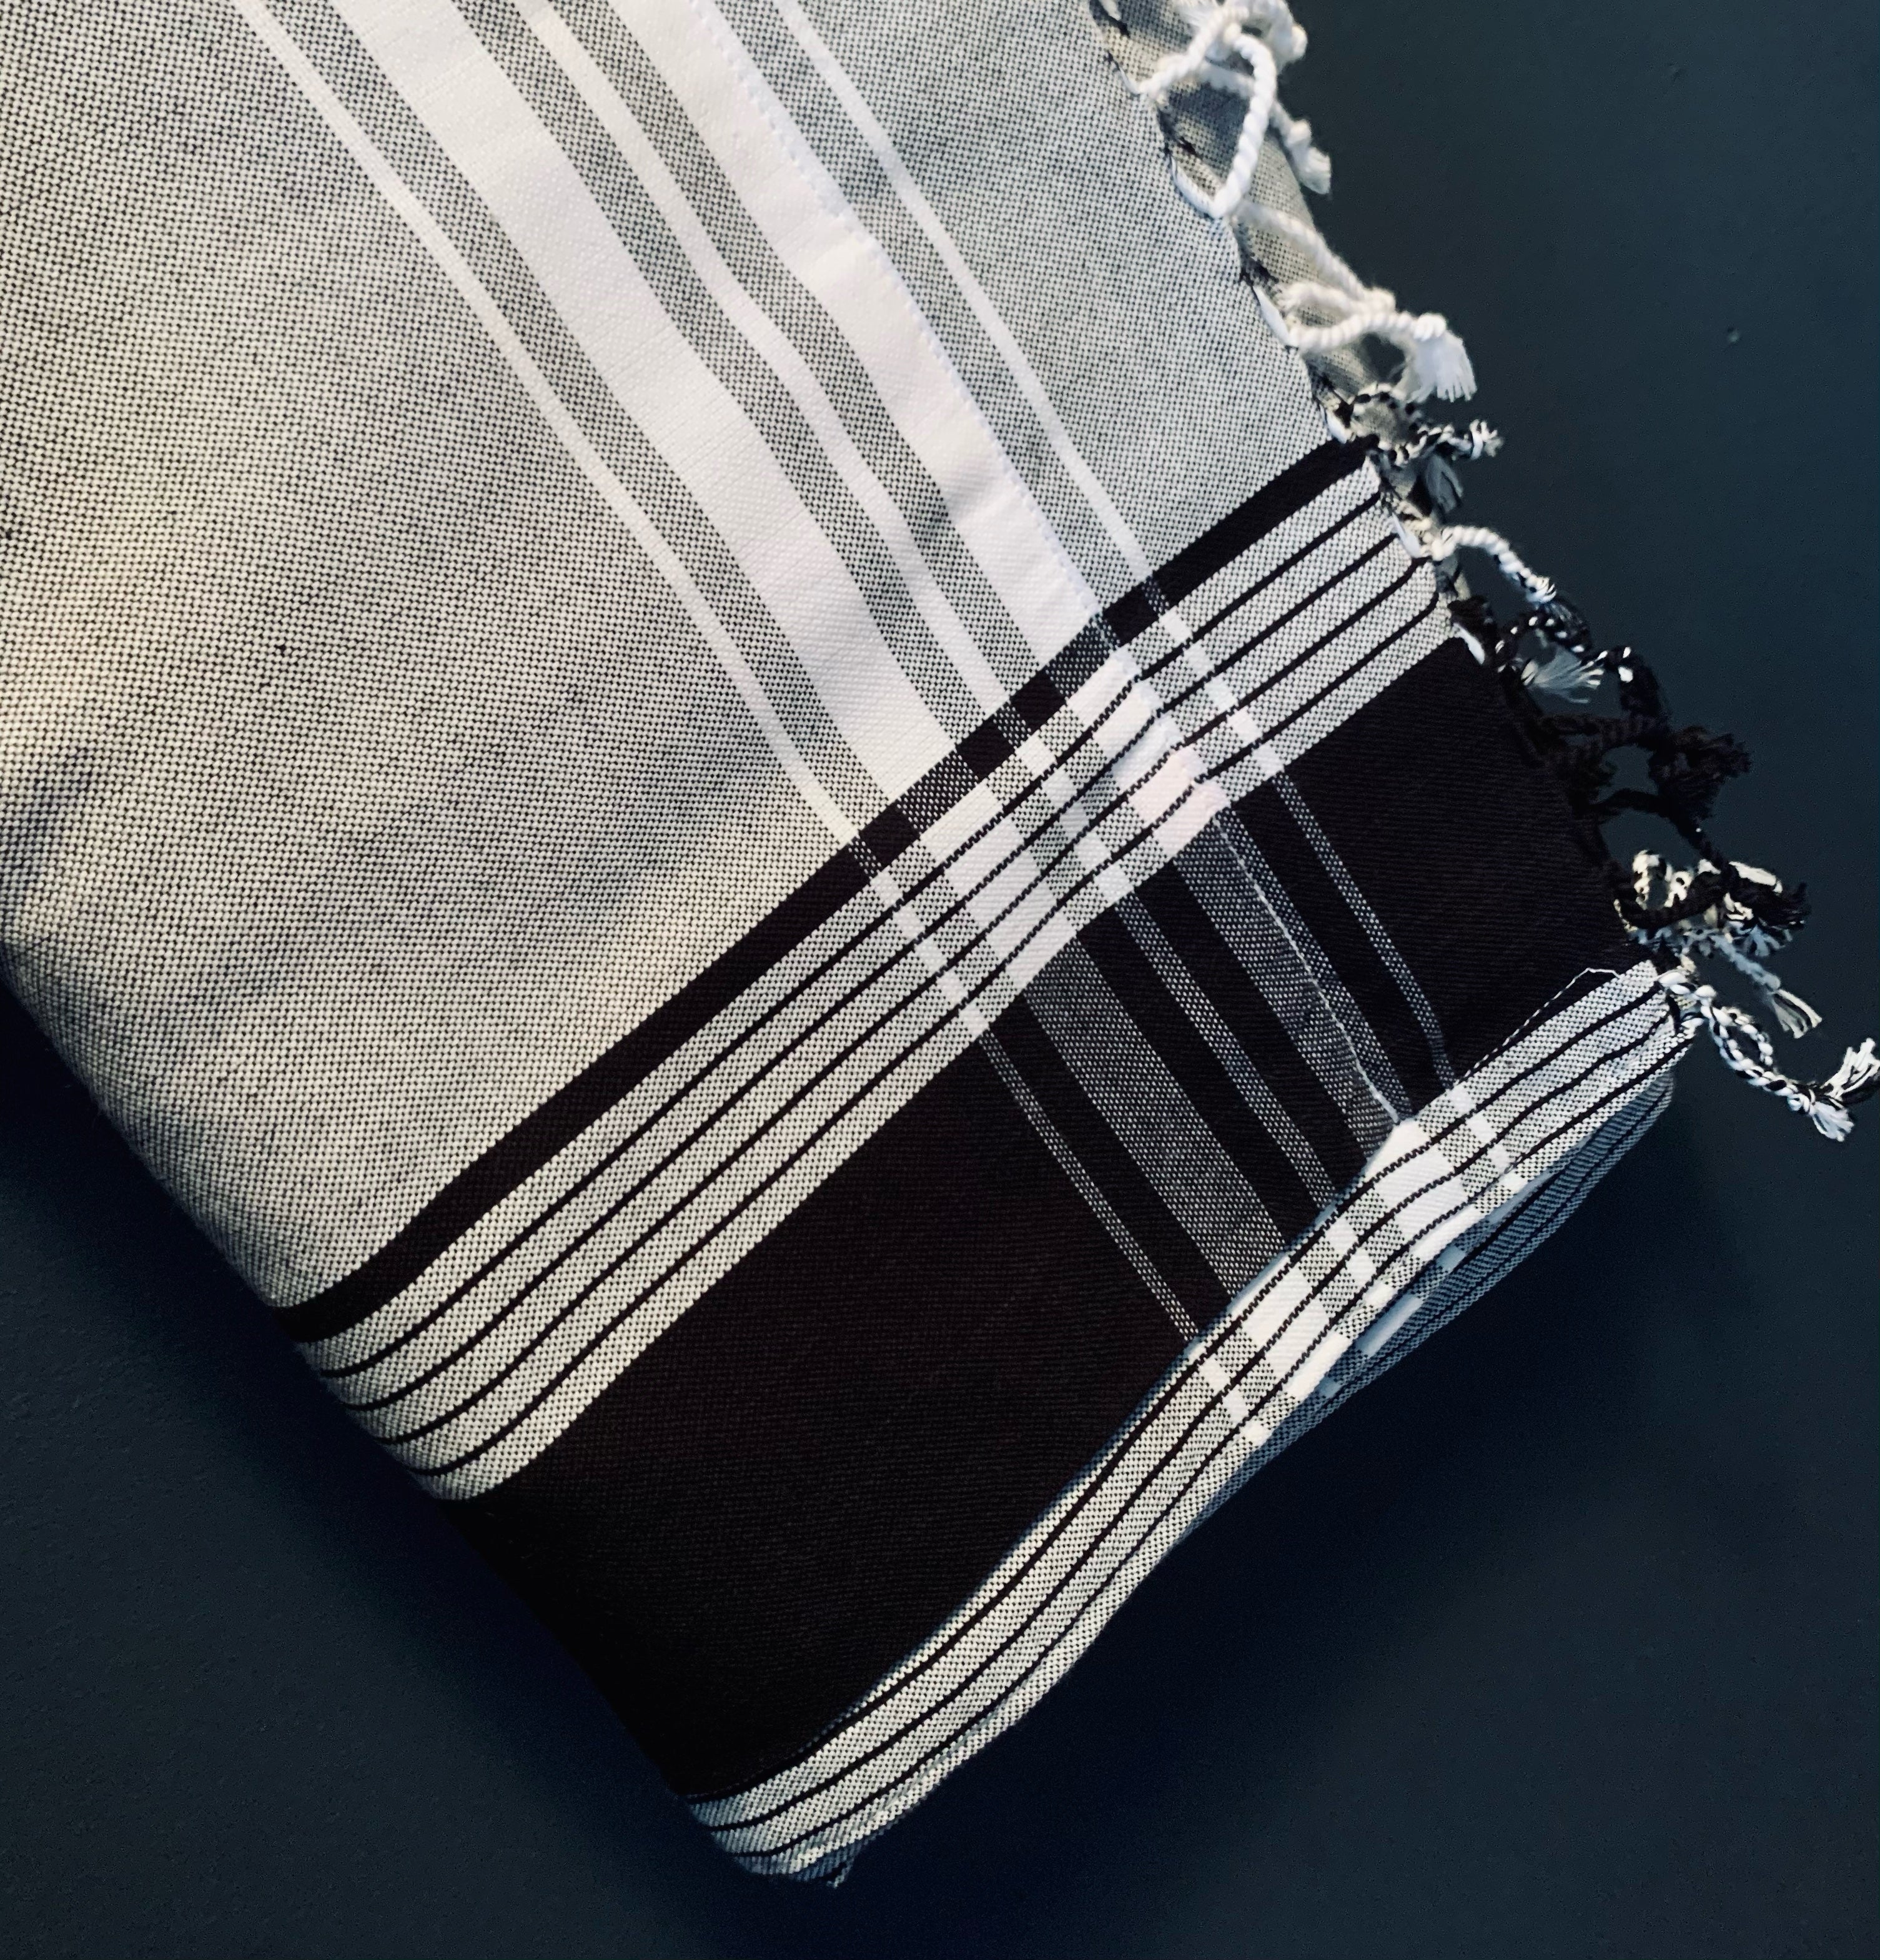 Kikoi Strandtuch light grey with black/white and grey towel